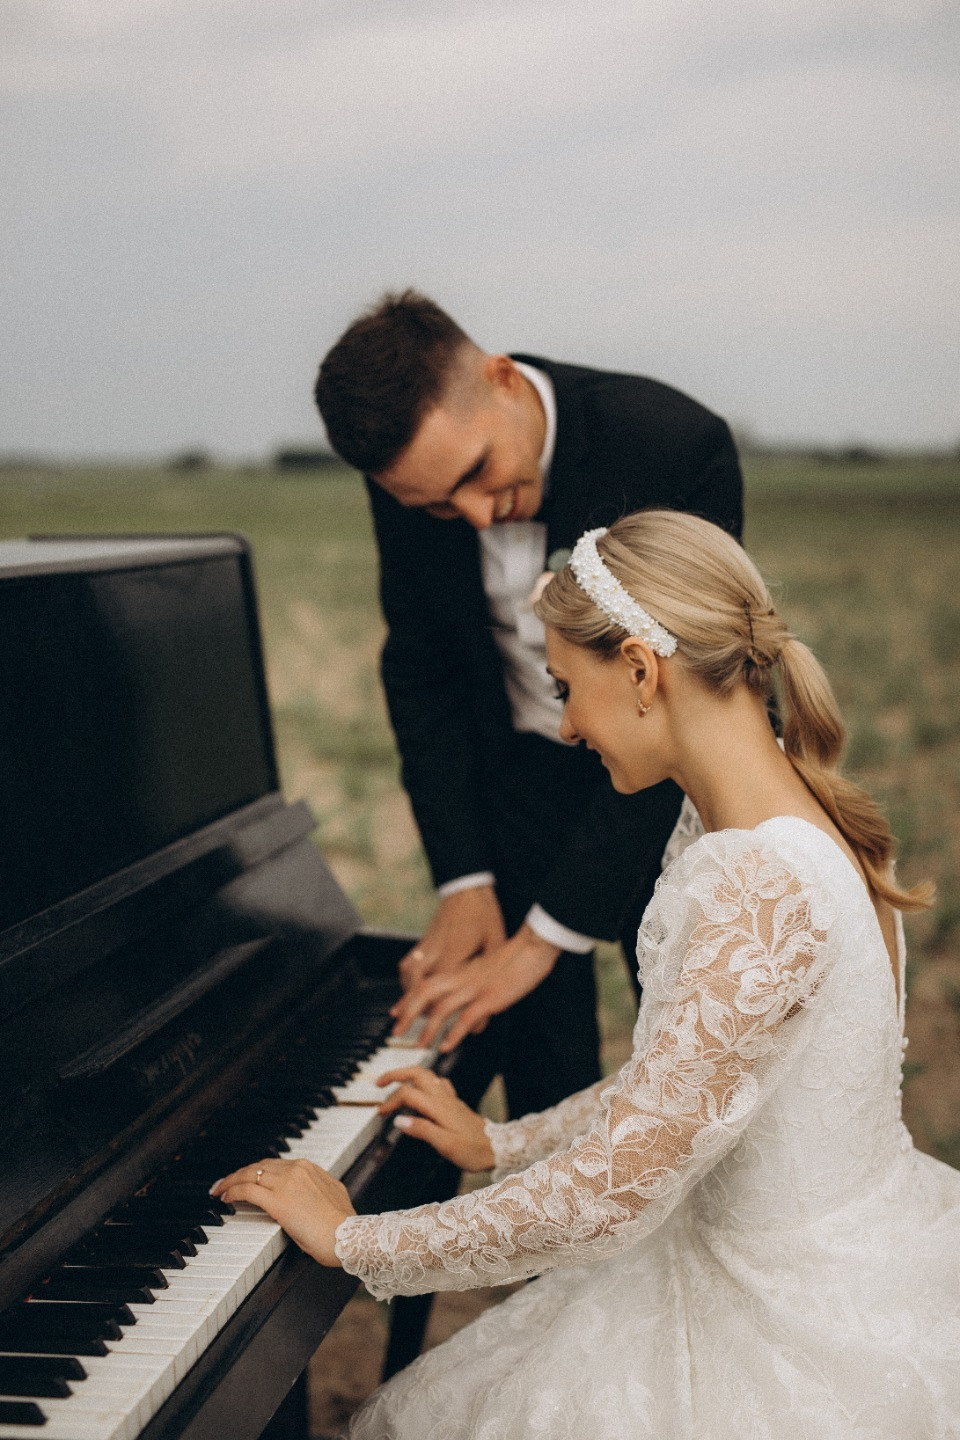 Try this on your piano: семейная свадьба в ресторане